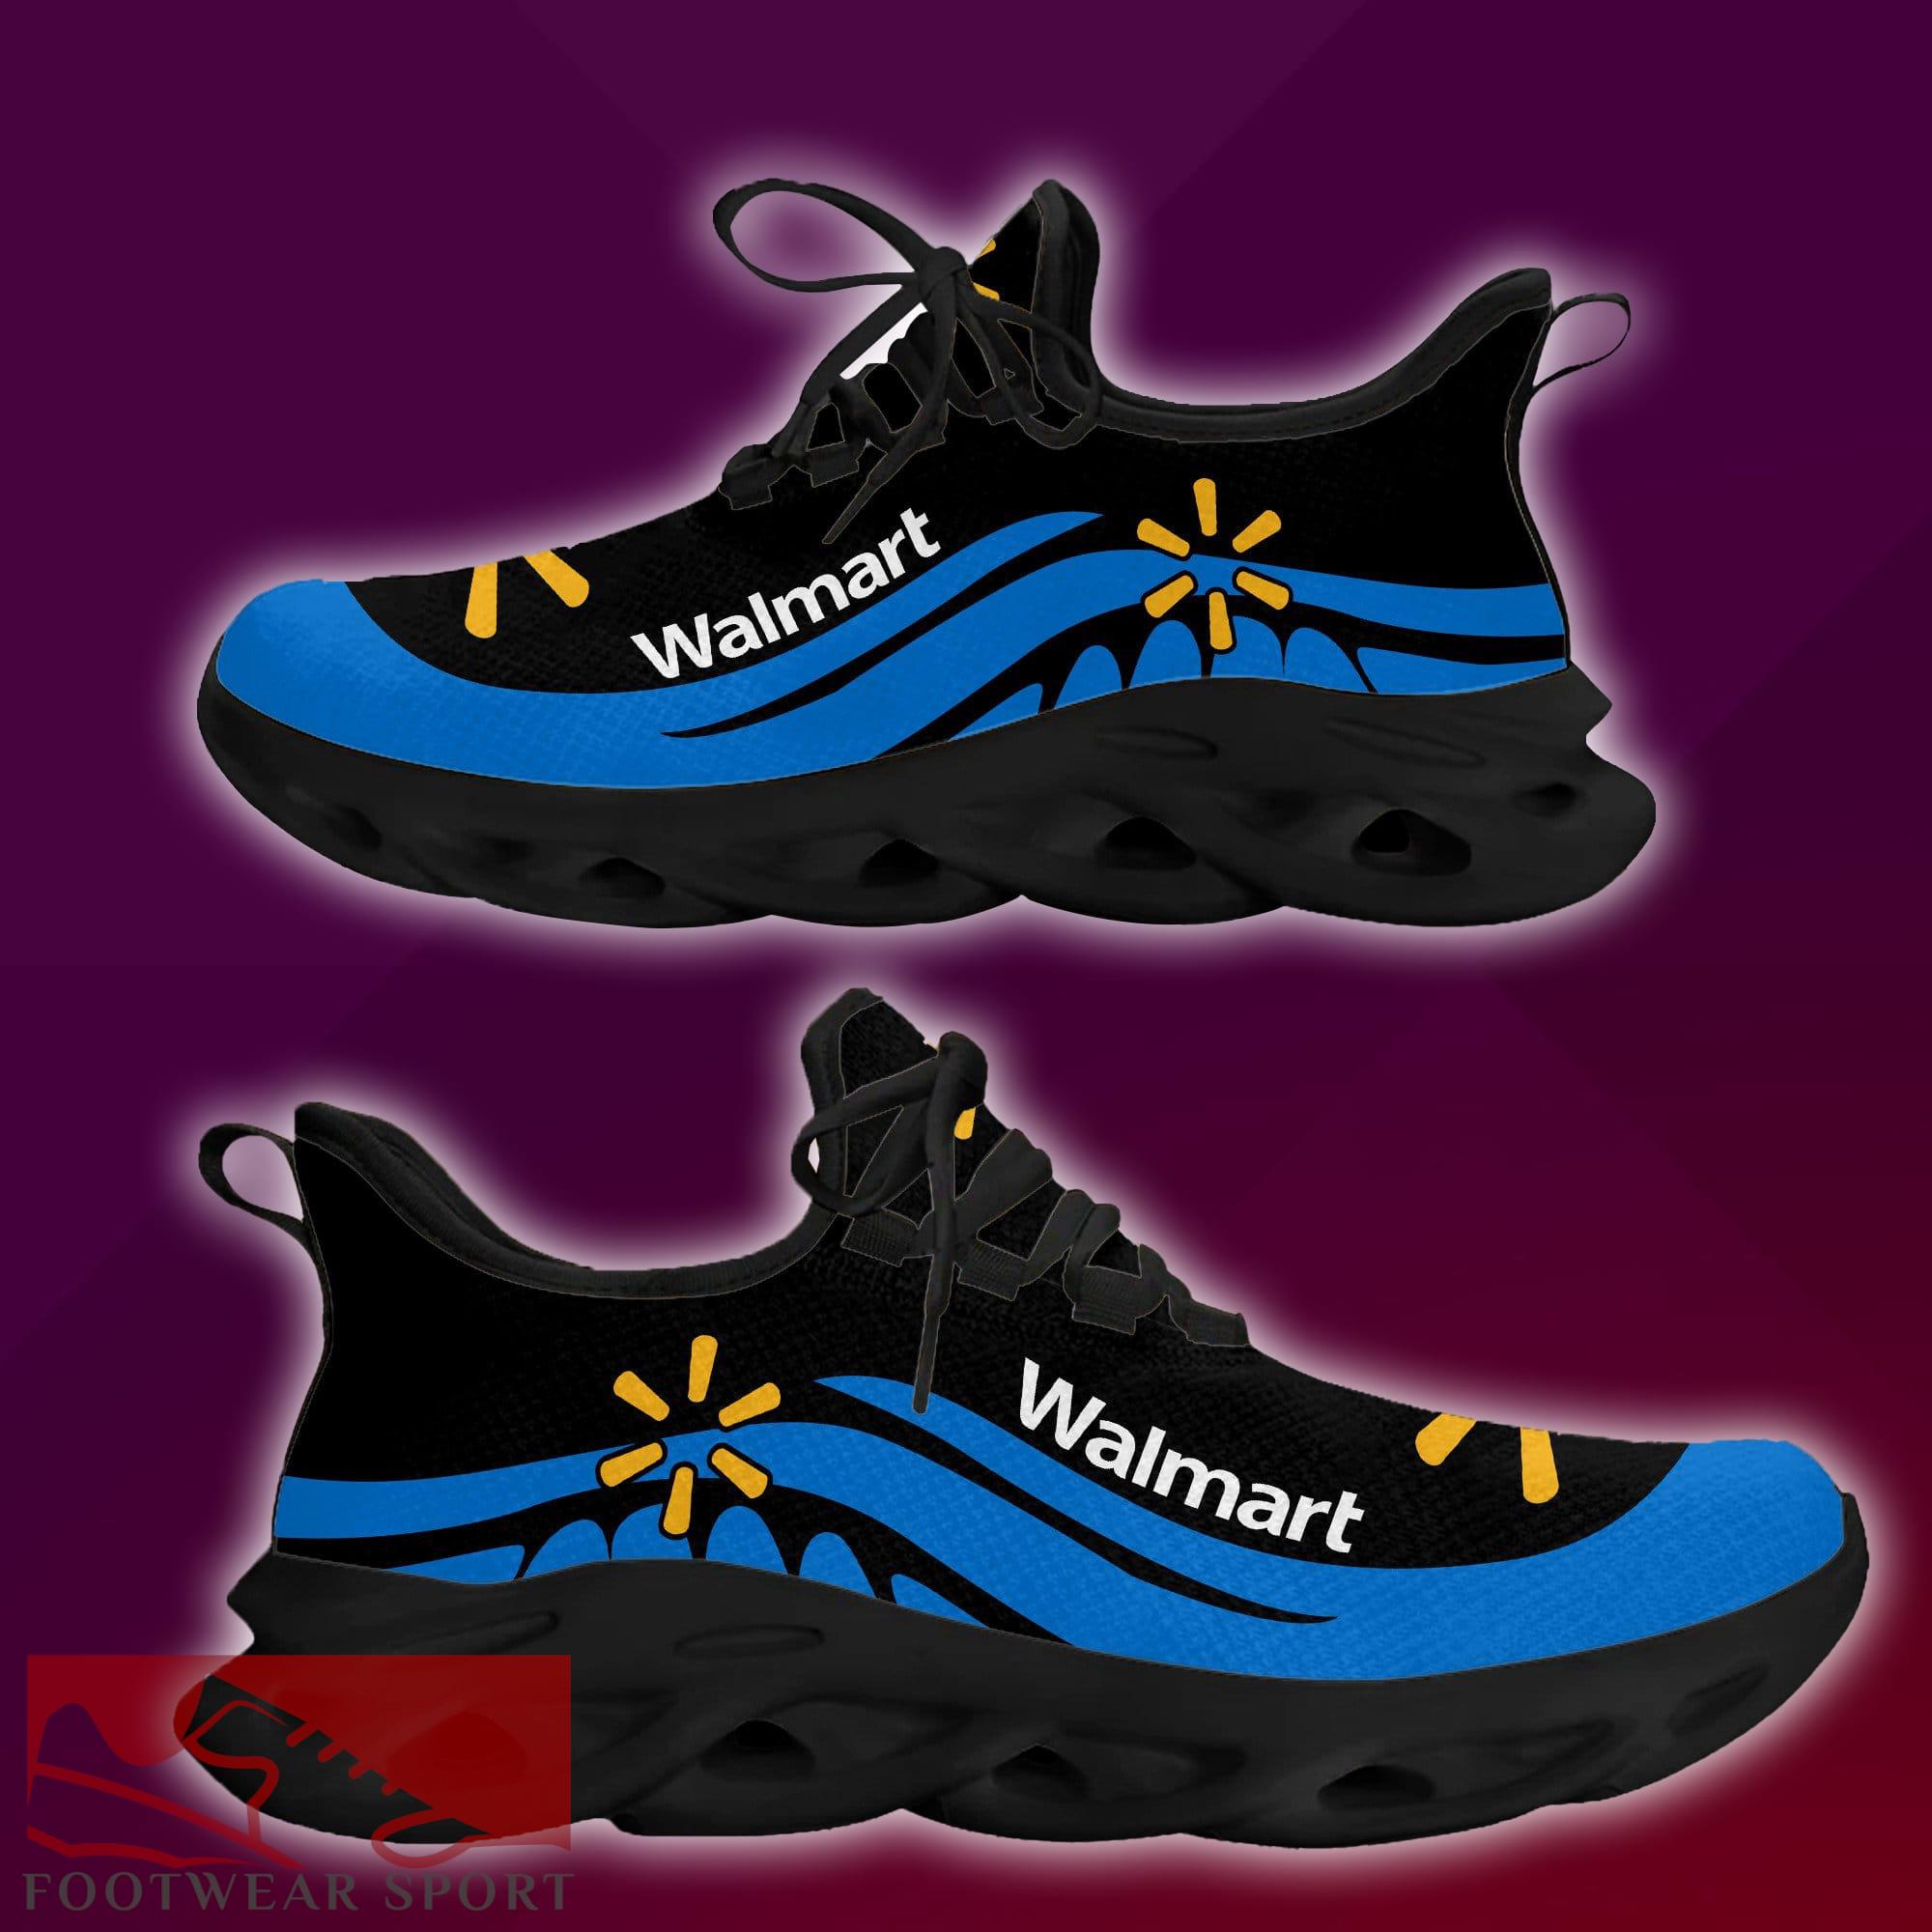 WALMART Brand New Logo Max Soul Sneakers Streetwear Chunky Shoes Gift - WALMART New Brand Chunky Shoes Style Max Soul Sneakers Photo 1